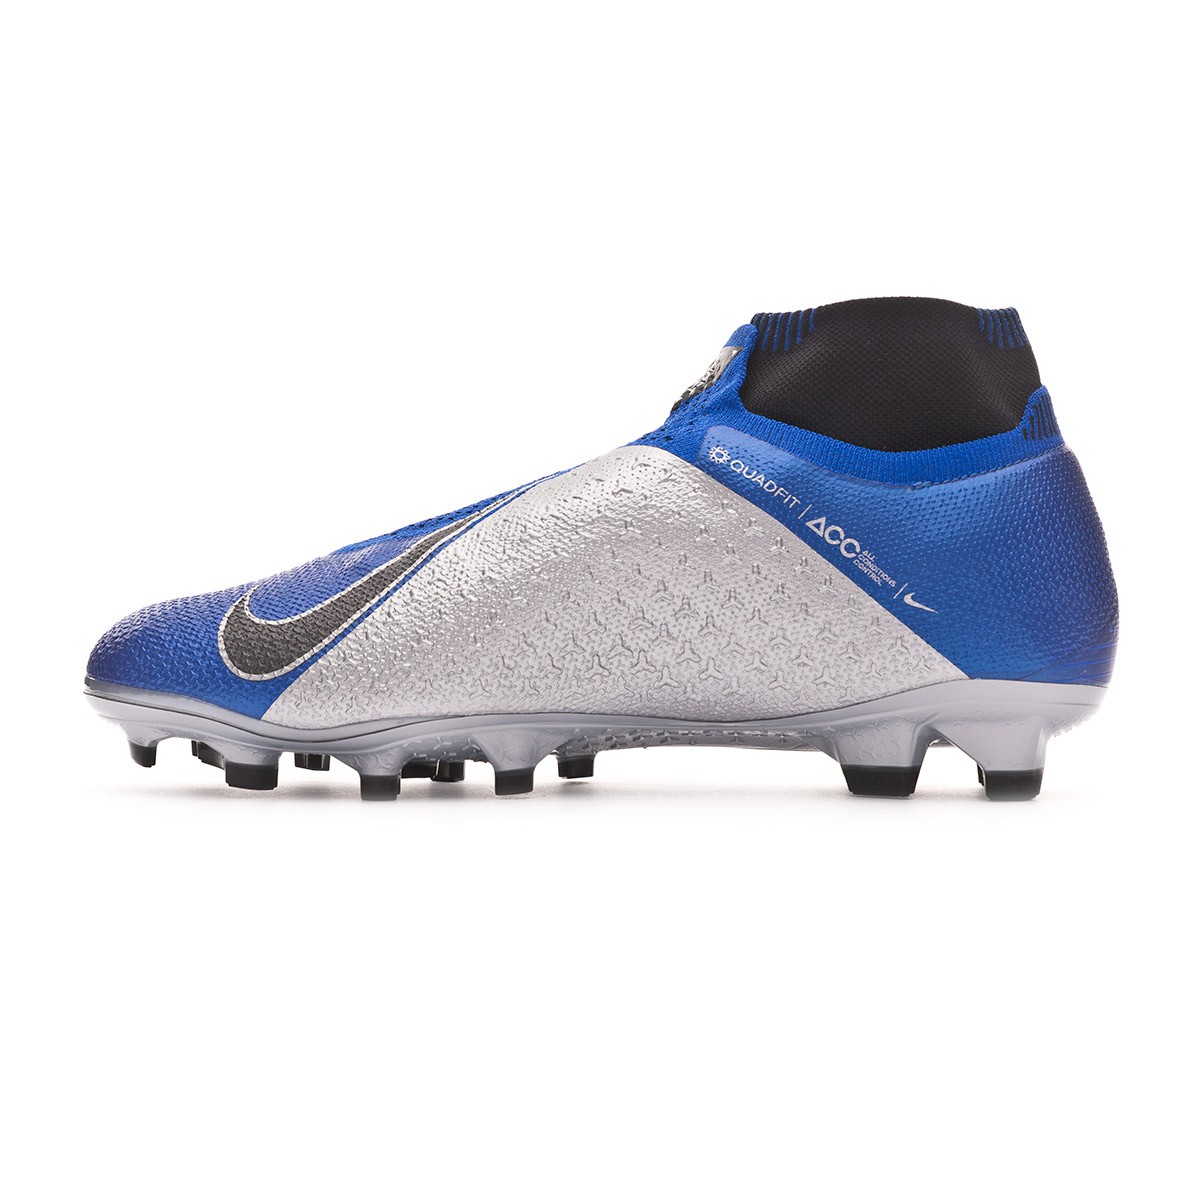 blue nike football boots